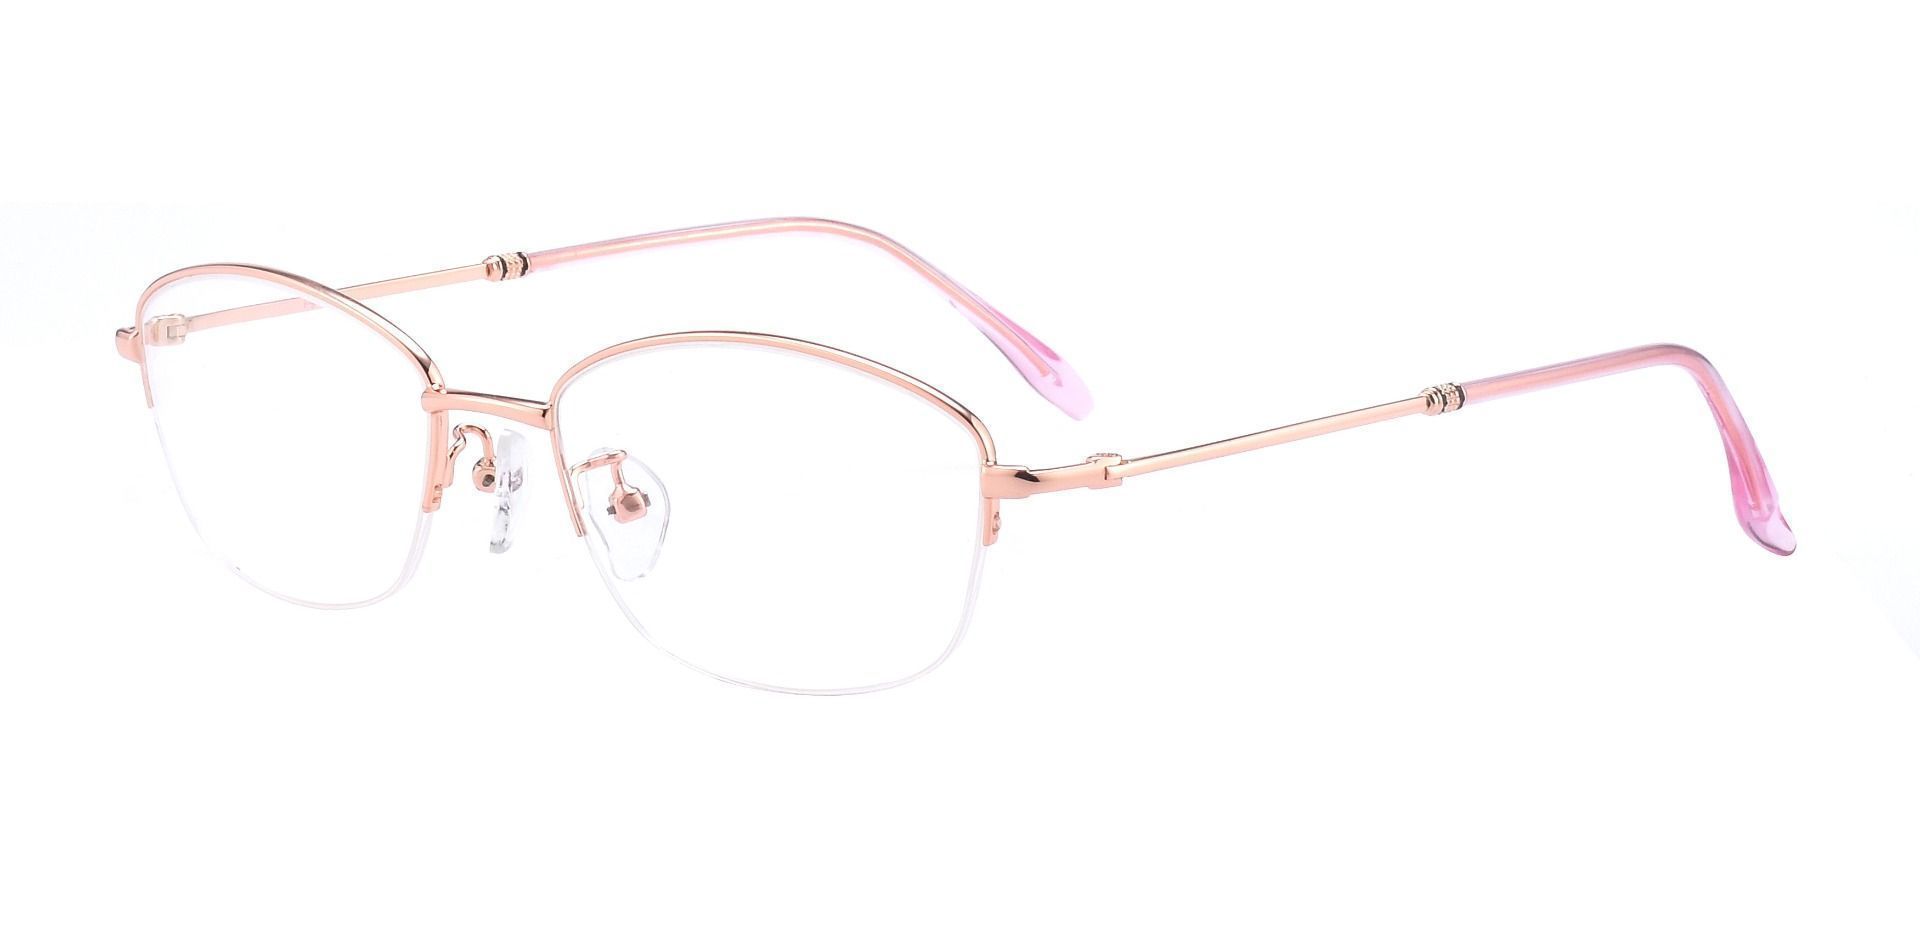 Mendoza Oval Lined Bifocal Glasses - Rose Gold